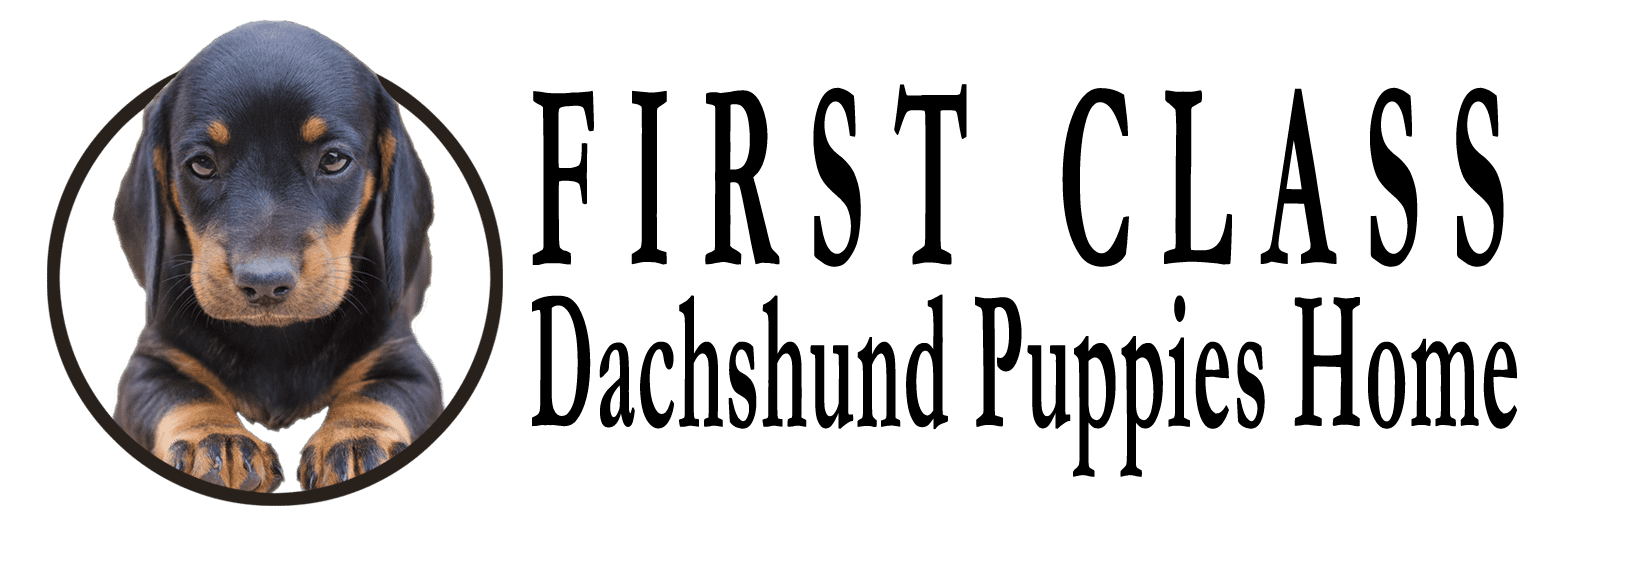 Firstclass Dachshund Puppies Home